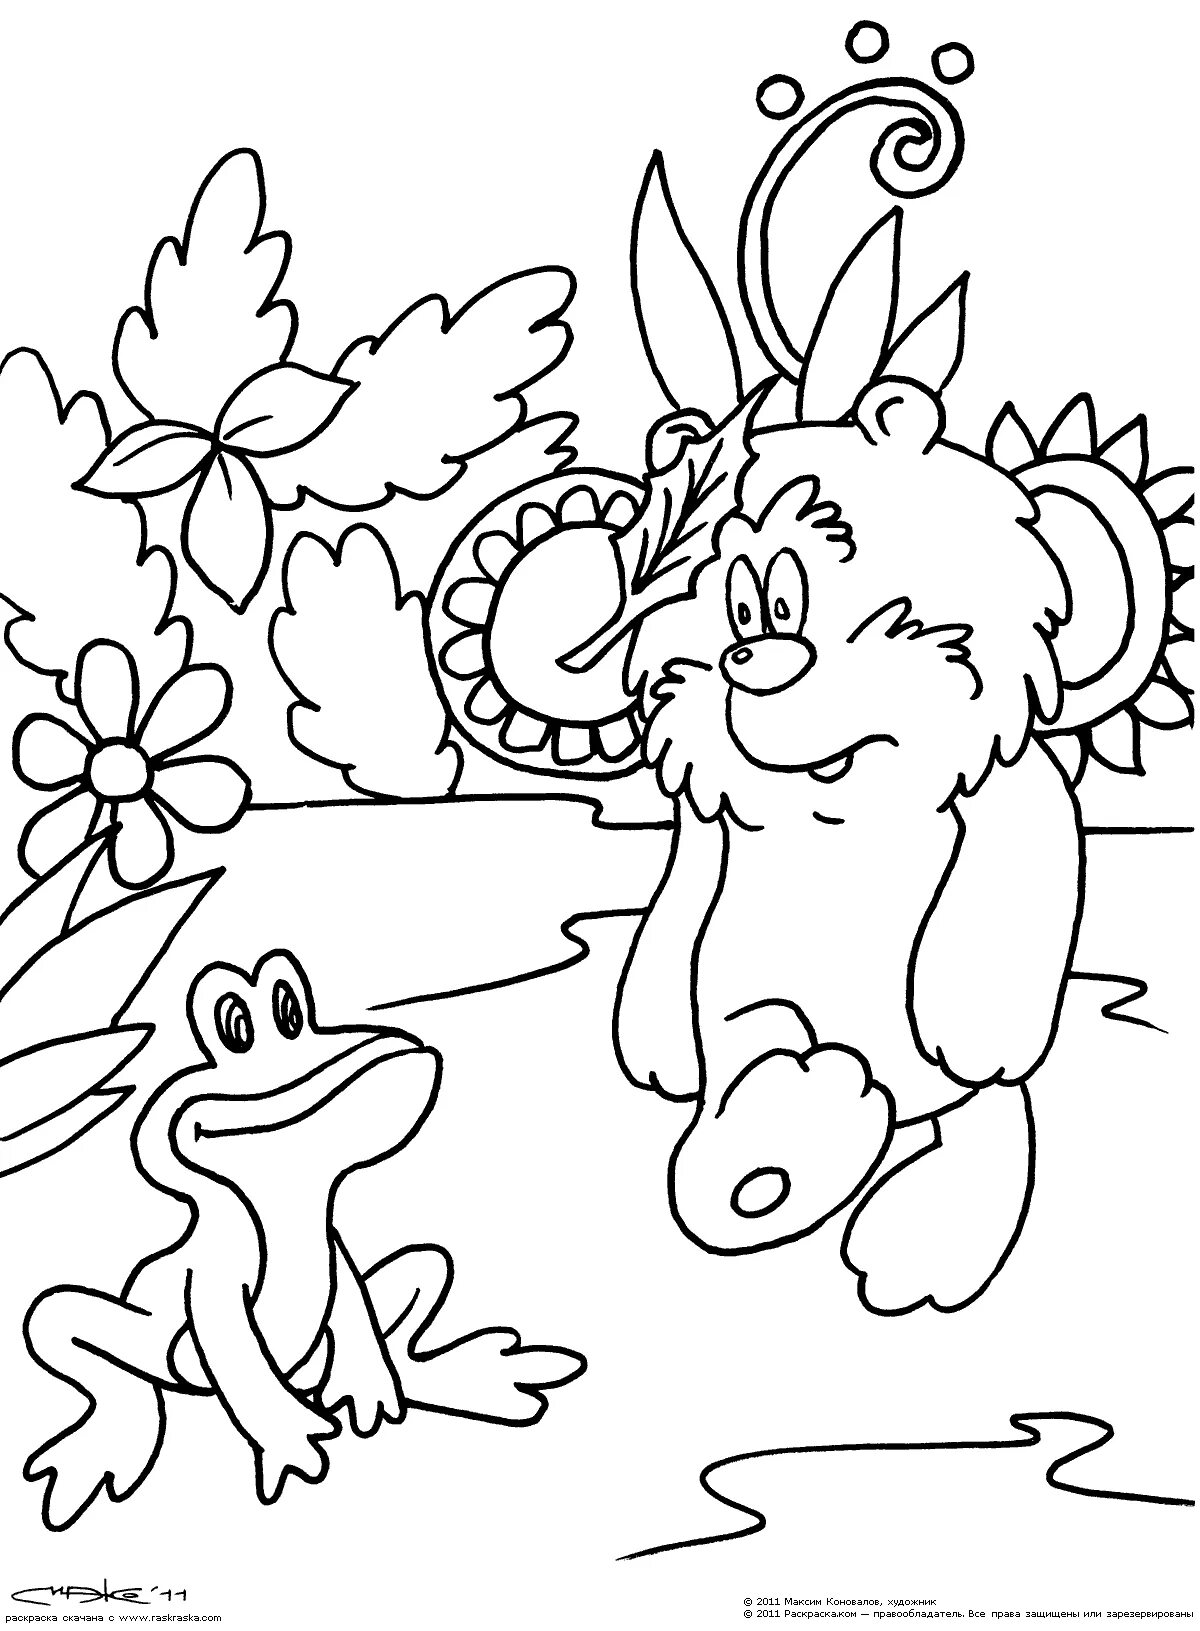 Shine hedgehog and teddy bear coloring book